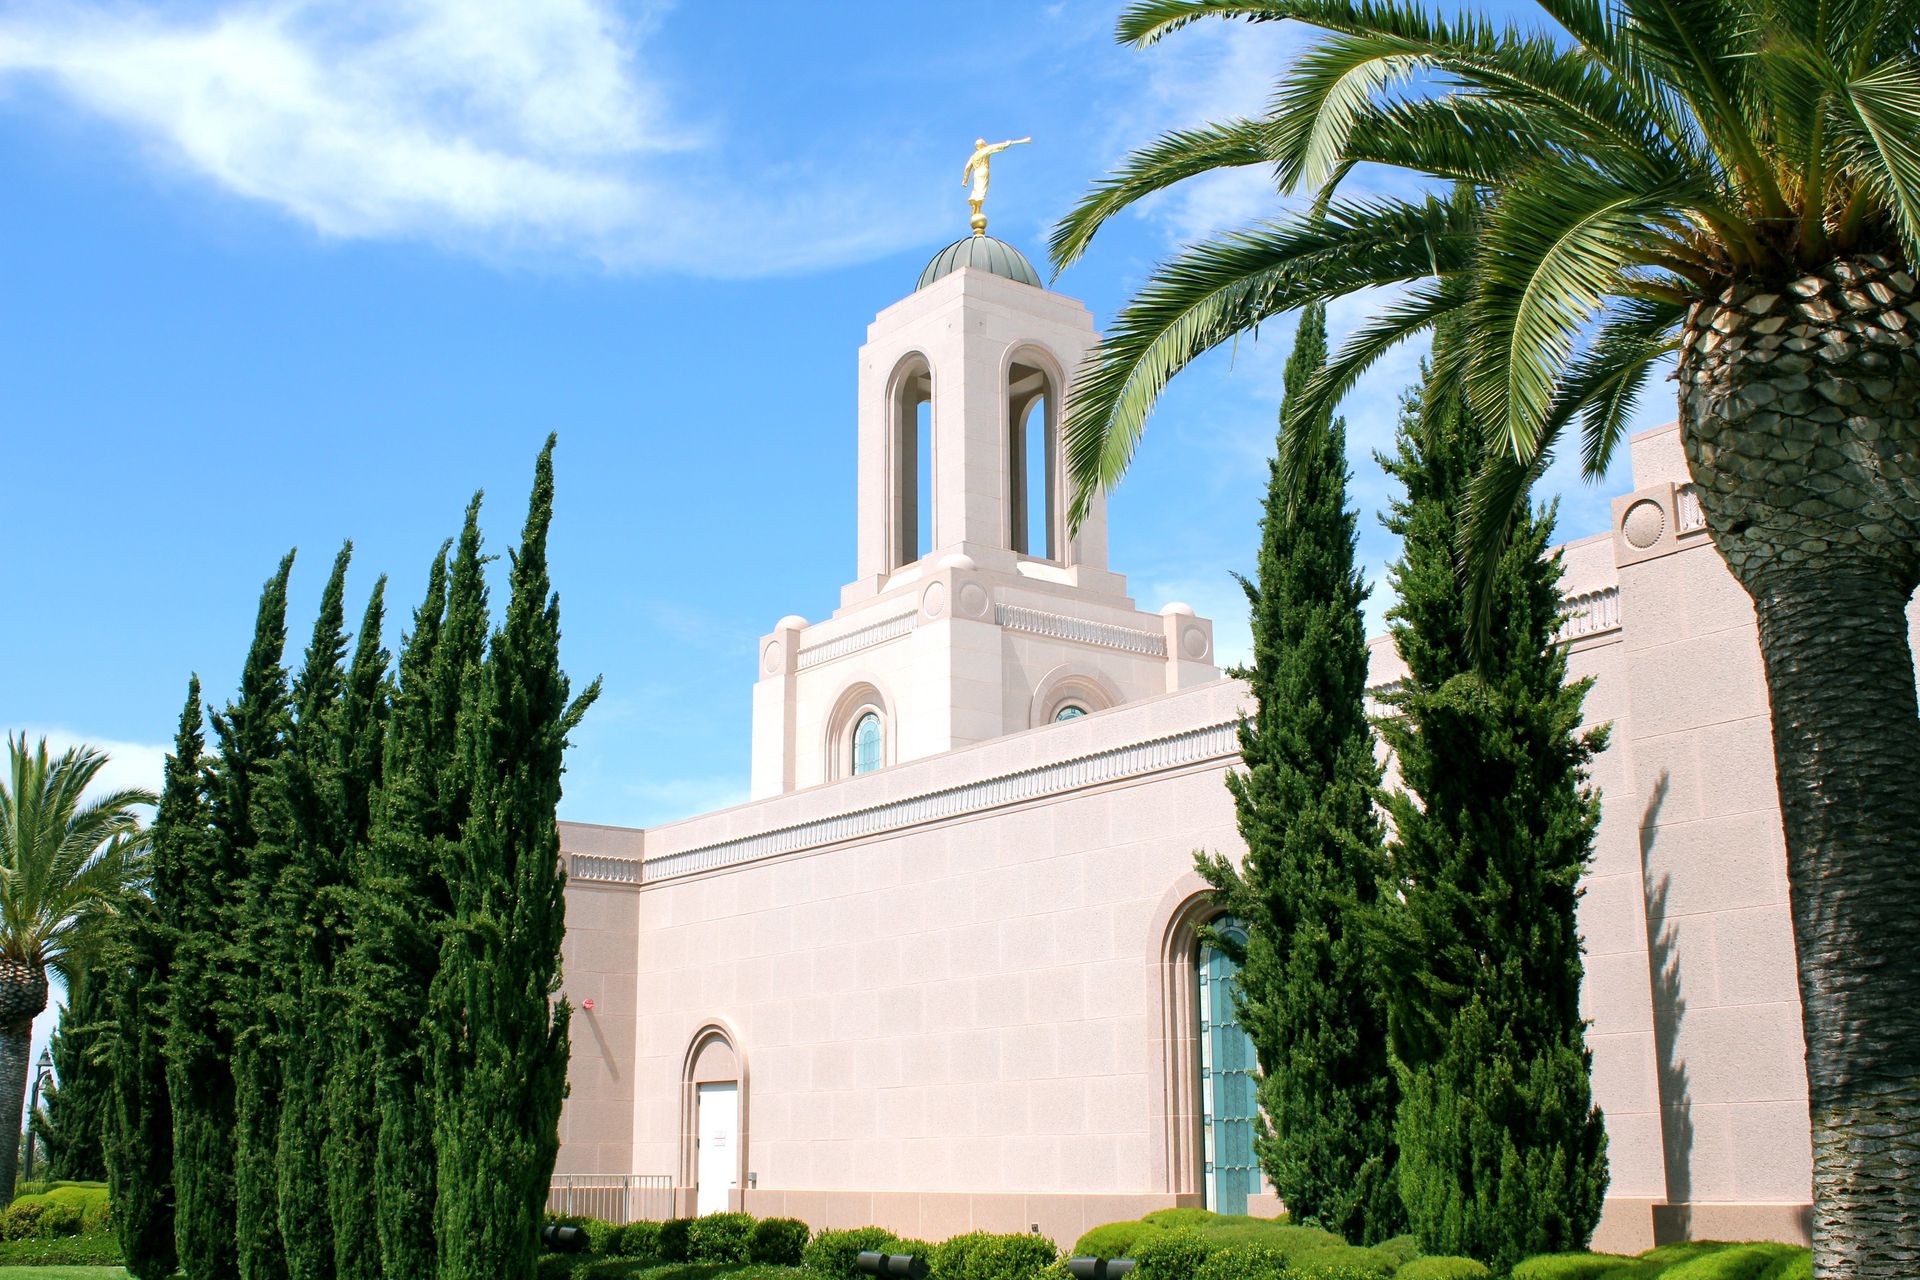 The Newport Beach California Temple exterior, including scenery.